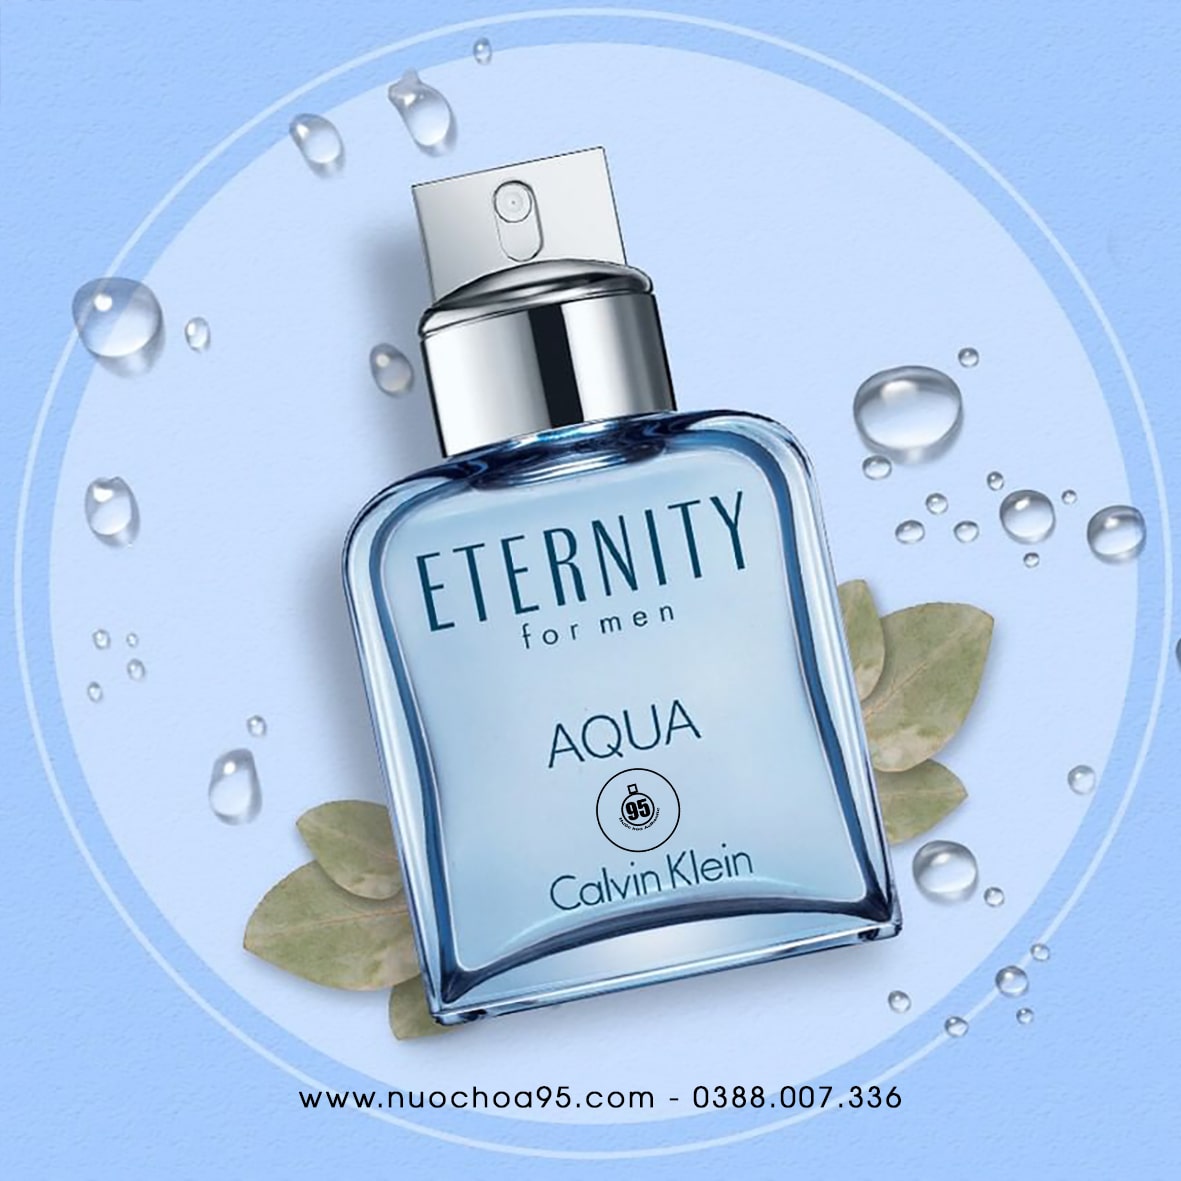 Nước hoa Calvin Klein Eternity Aqua For Men - Ảnh 1